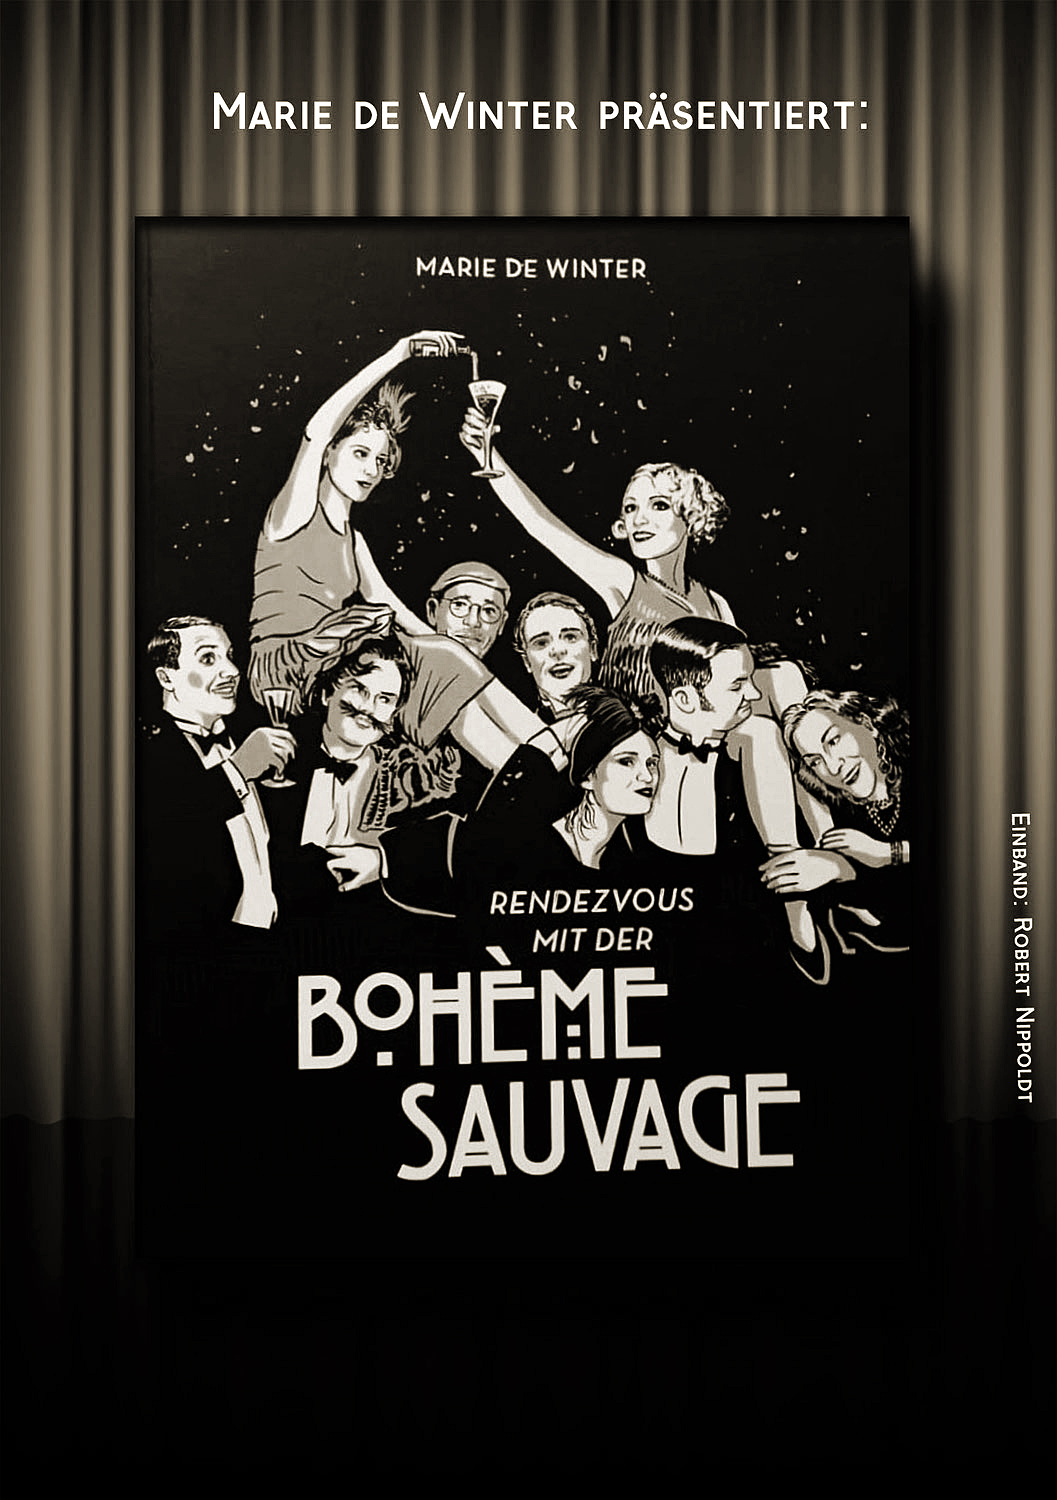 MARIE DE WINTERS Buch „Rendezvous mit der Bohème Sauvage“ ist erschienen!